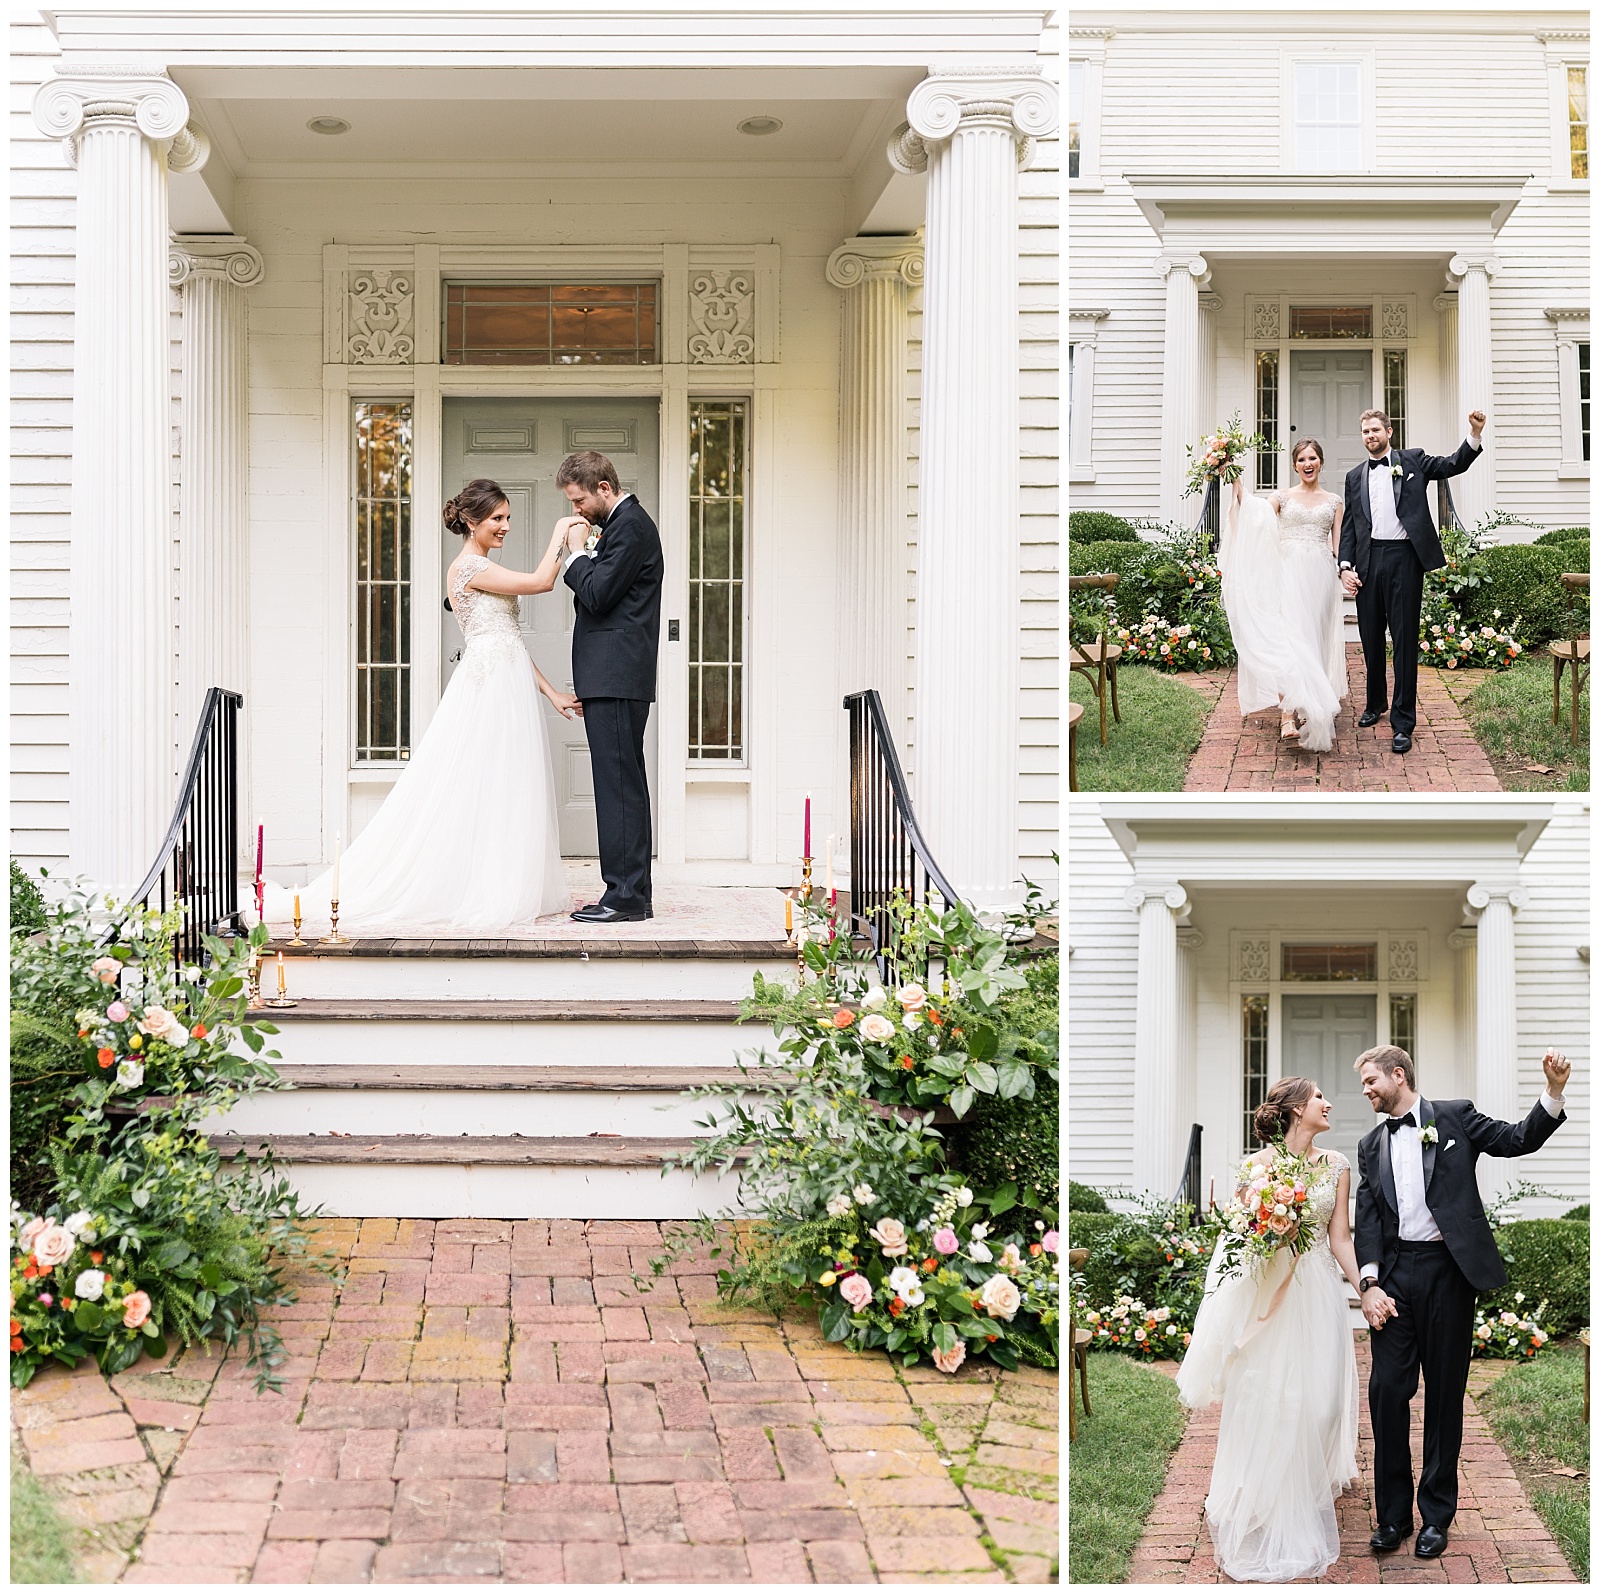 couple get married at holt house nc historic lexington wedding venue exterior white front porch